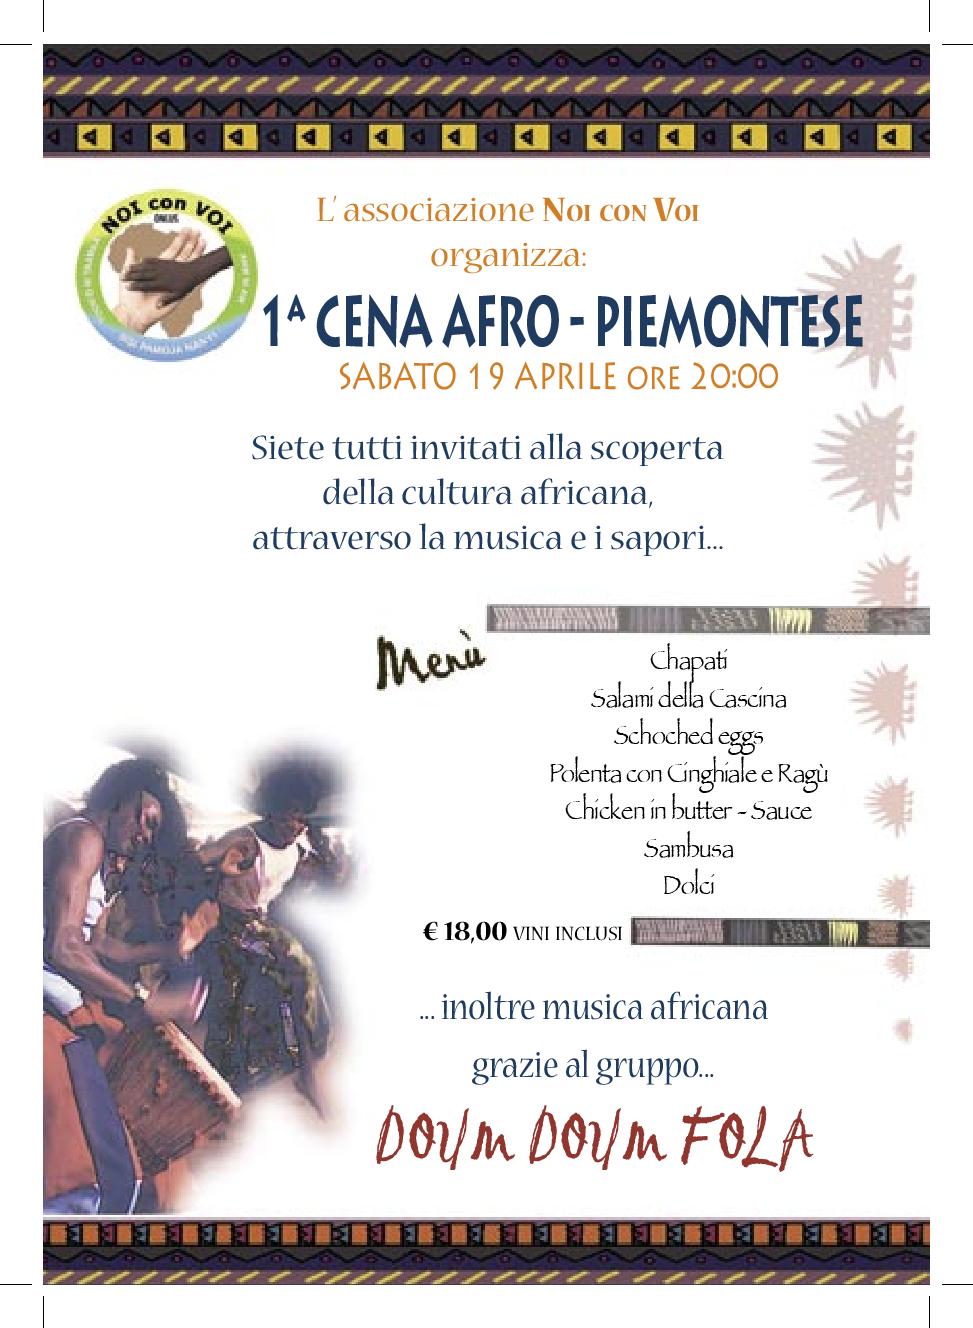 19 aprile 2008: Prima Cena Afro-Piemontese